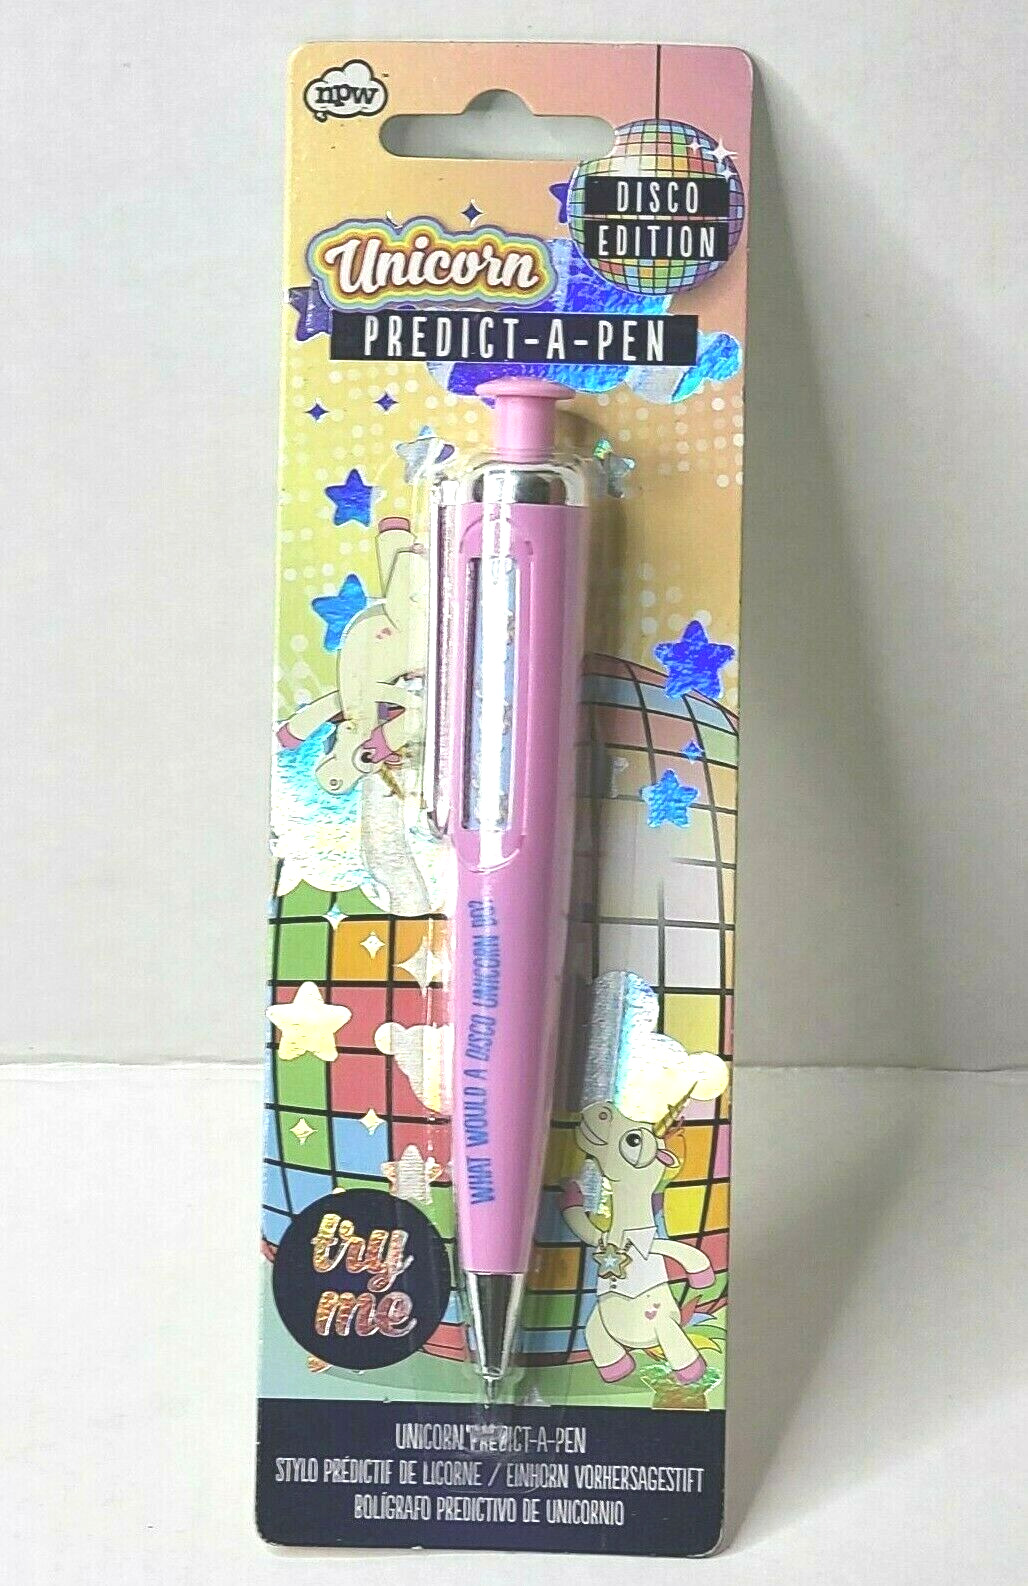 NPW Unicorn Predict A Pen Disco Edition Pink Novelty Pen Black Ink NEW